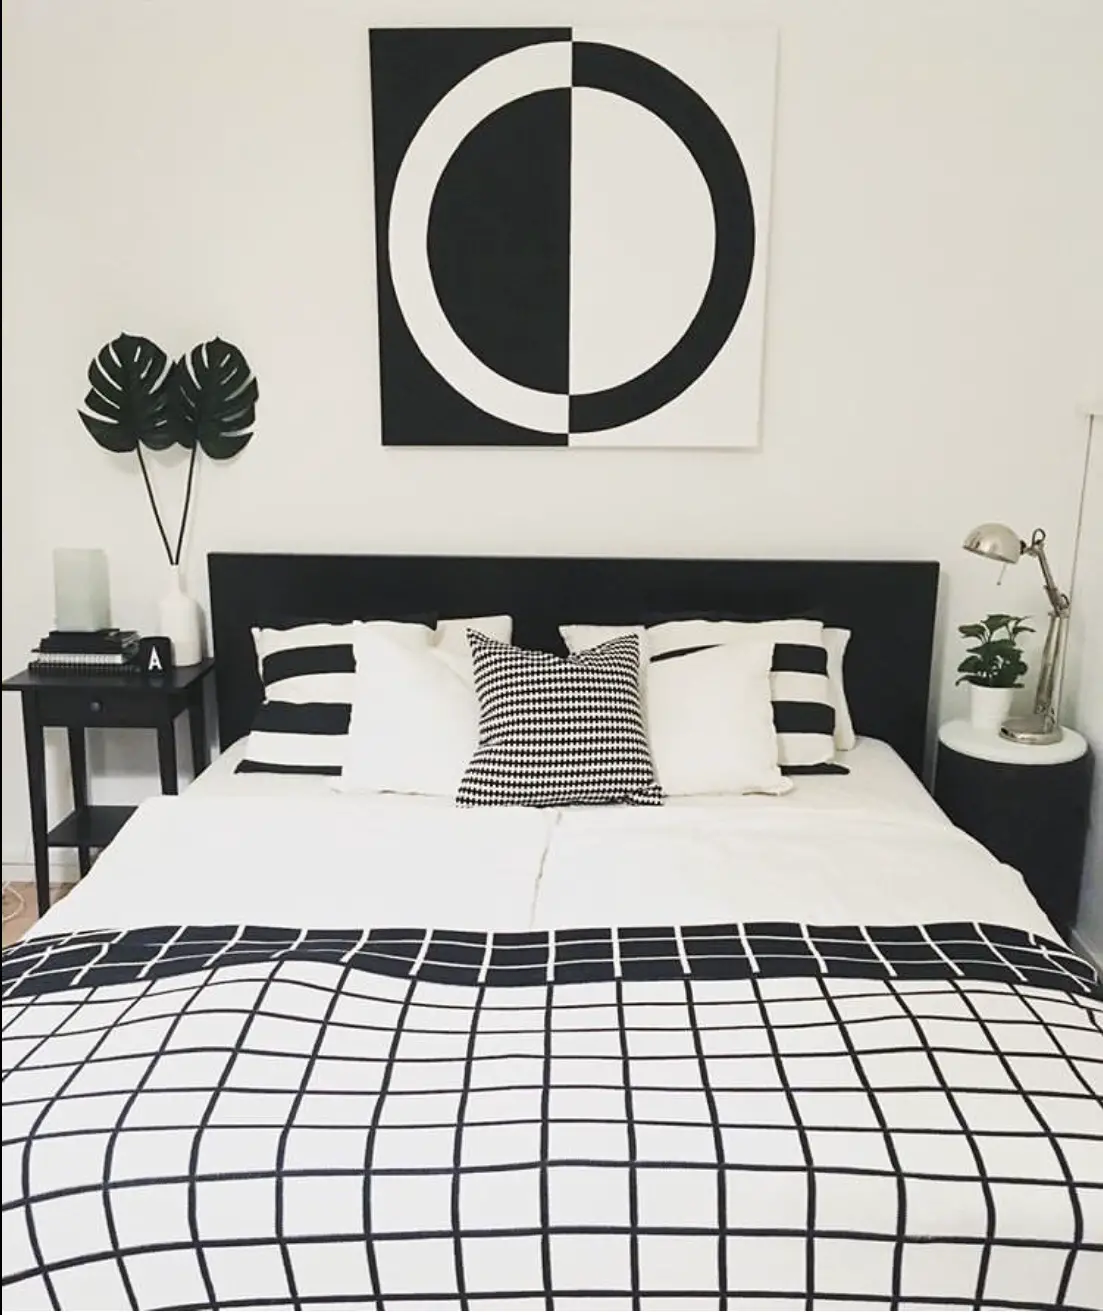 black and white bedroom decor